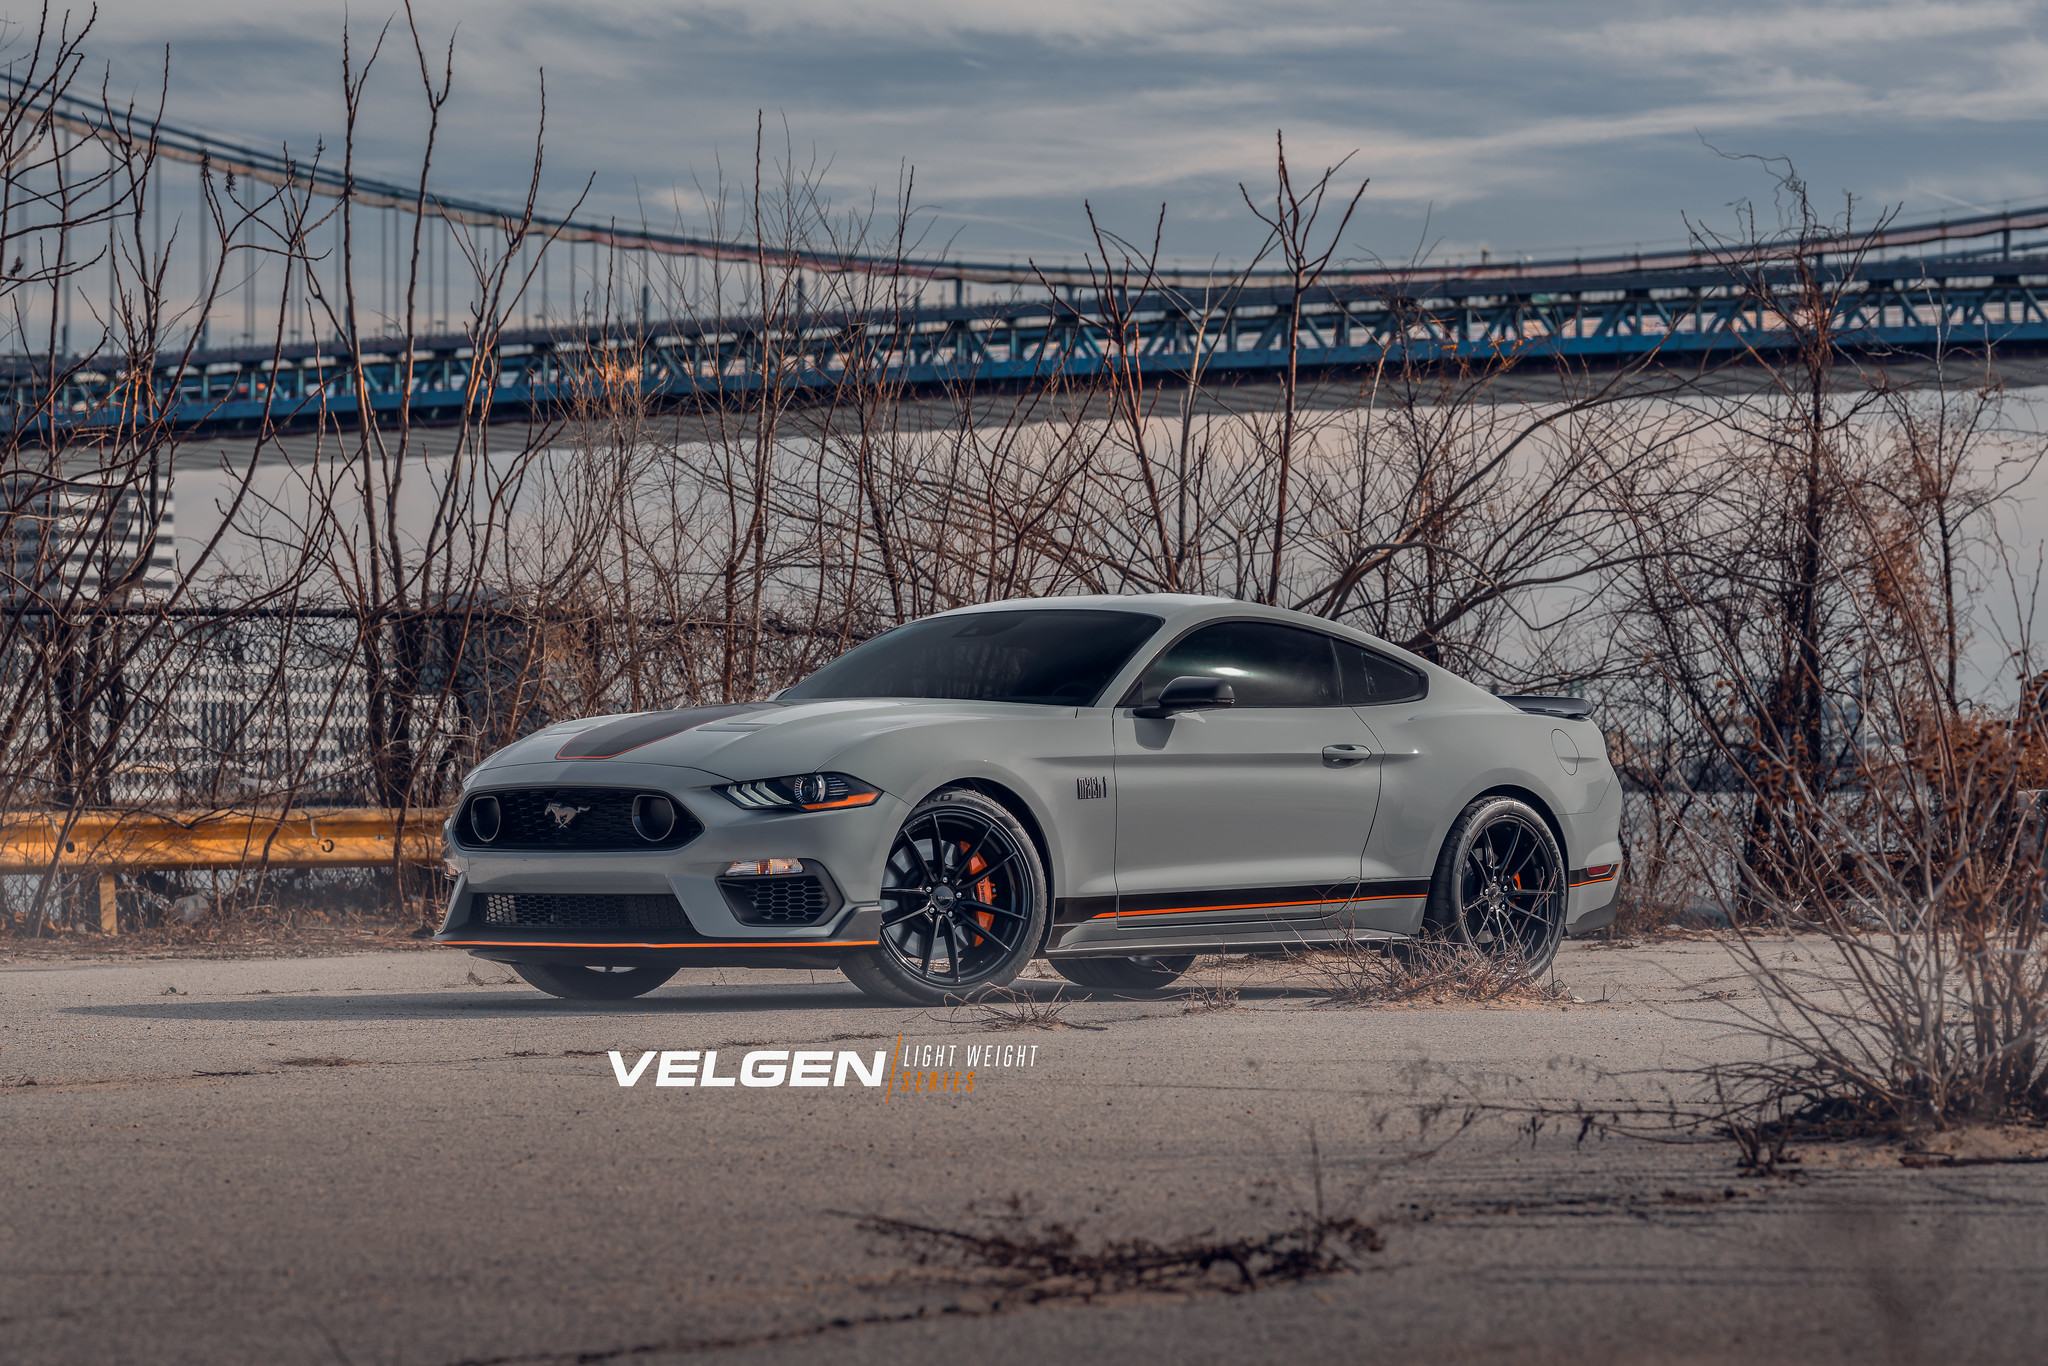 S650 Mustang Velgen wheels for your S650 Mustang | Vibe Motorsports 51037666127_ccc6b4d679_k